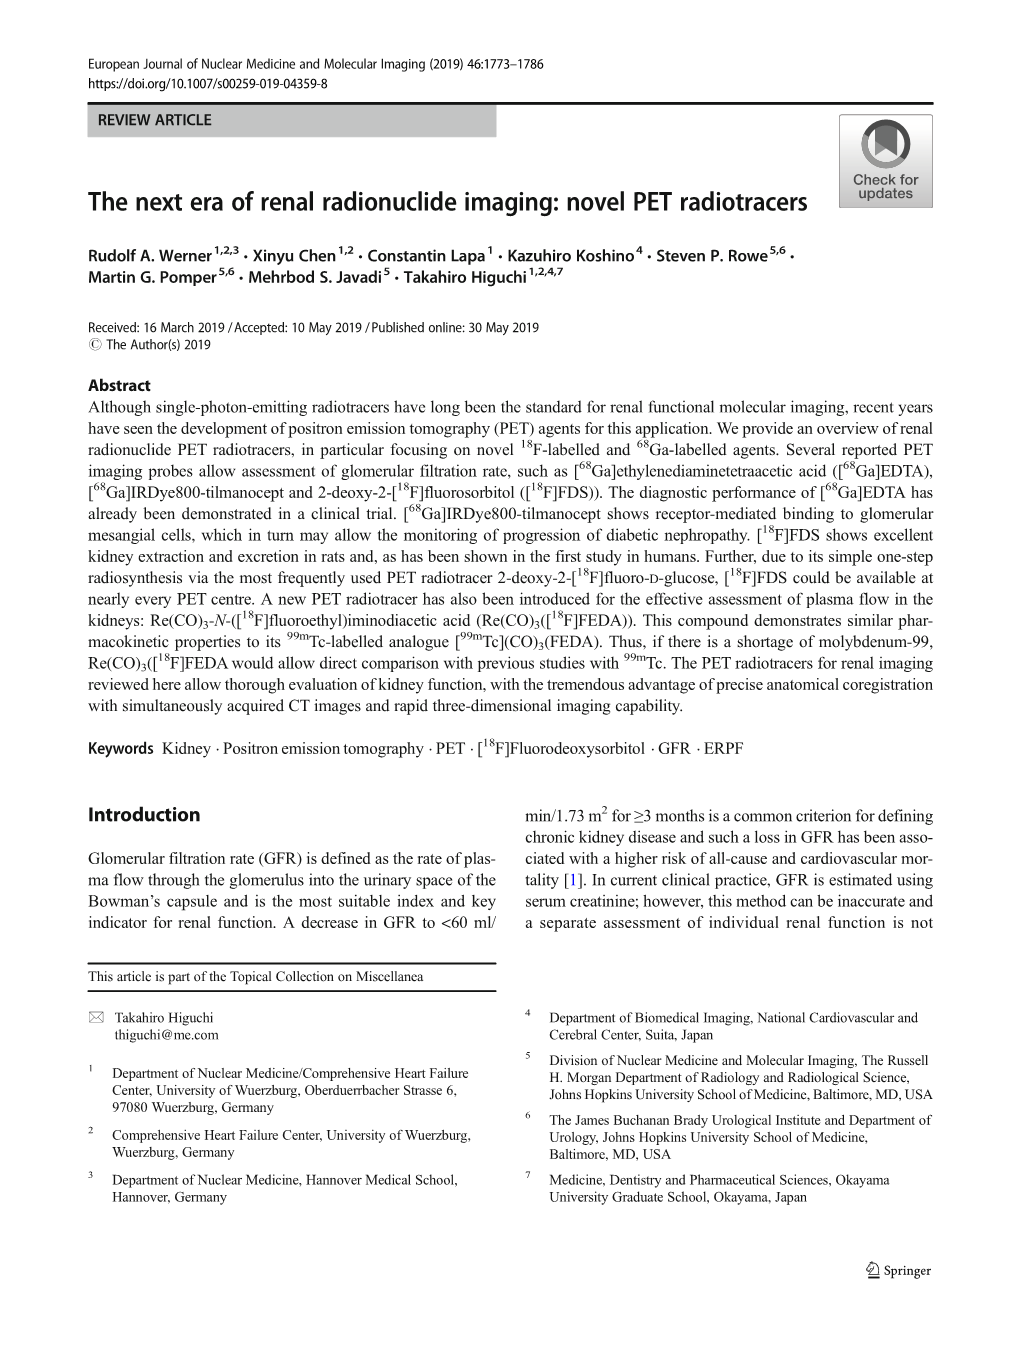 The Next Era of Renal Radionuclide Imaging: Novel PET Radiotracers